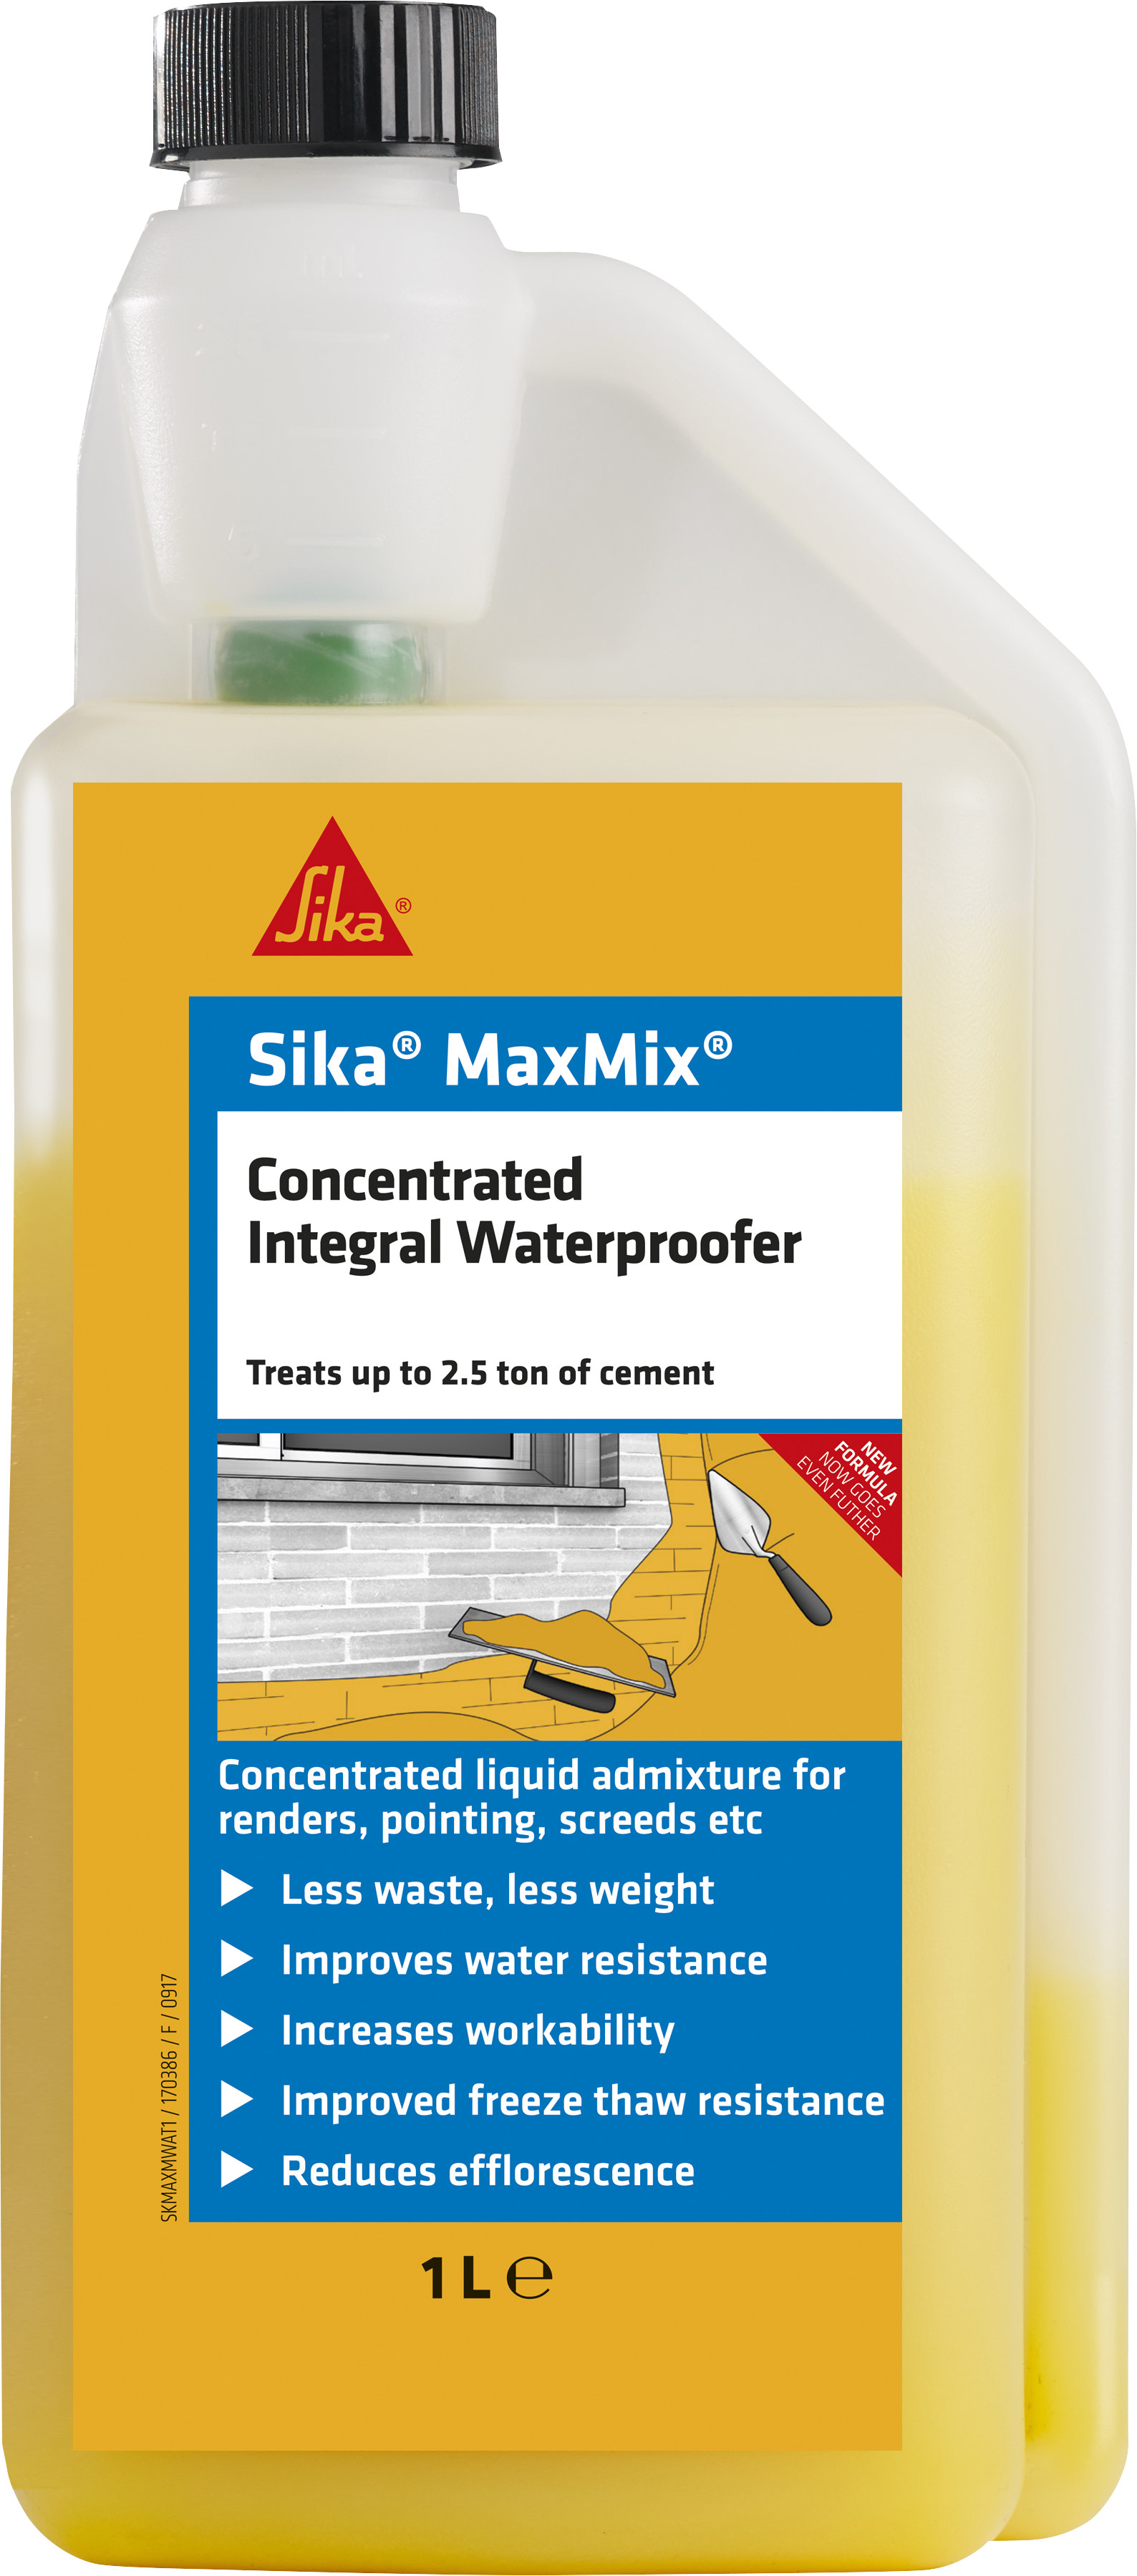 sika hardwood floor glue of sika maxmix waterproofer everbuild inside sika maxmix waterproofer